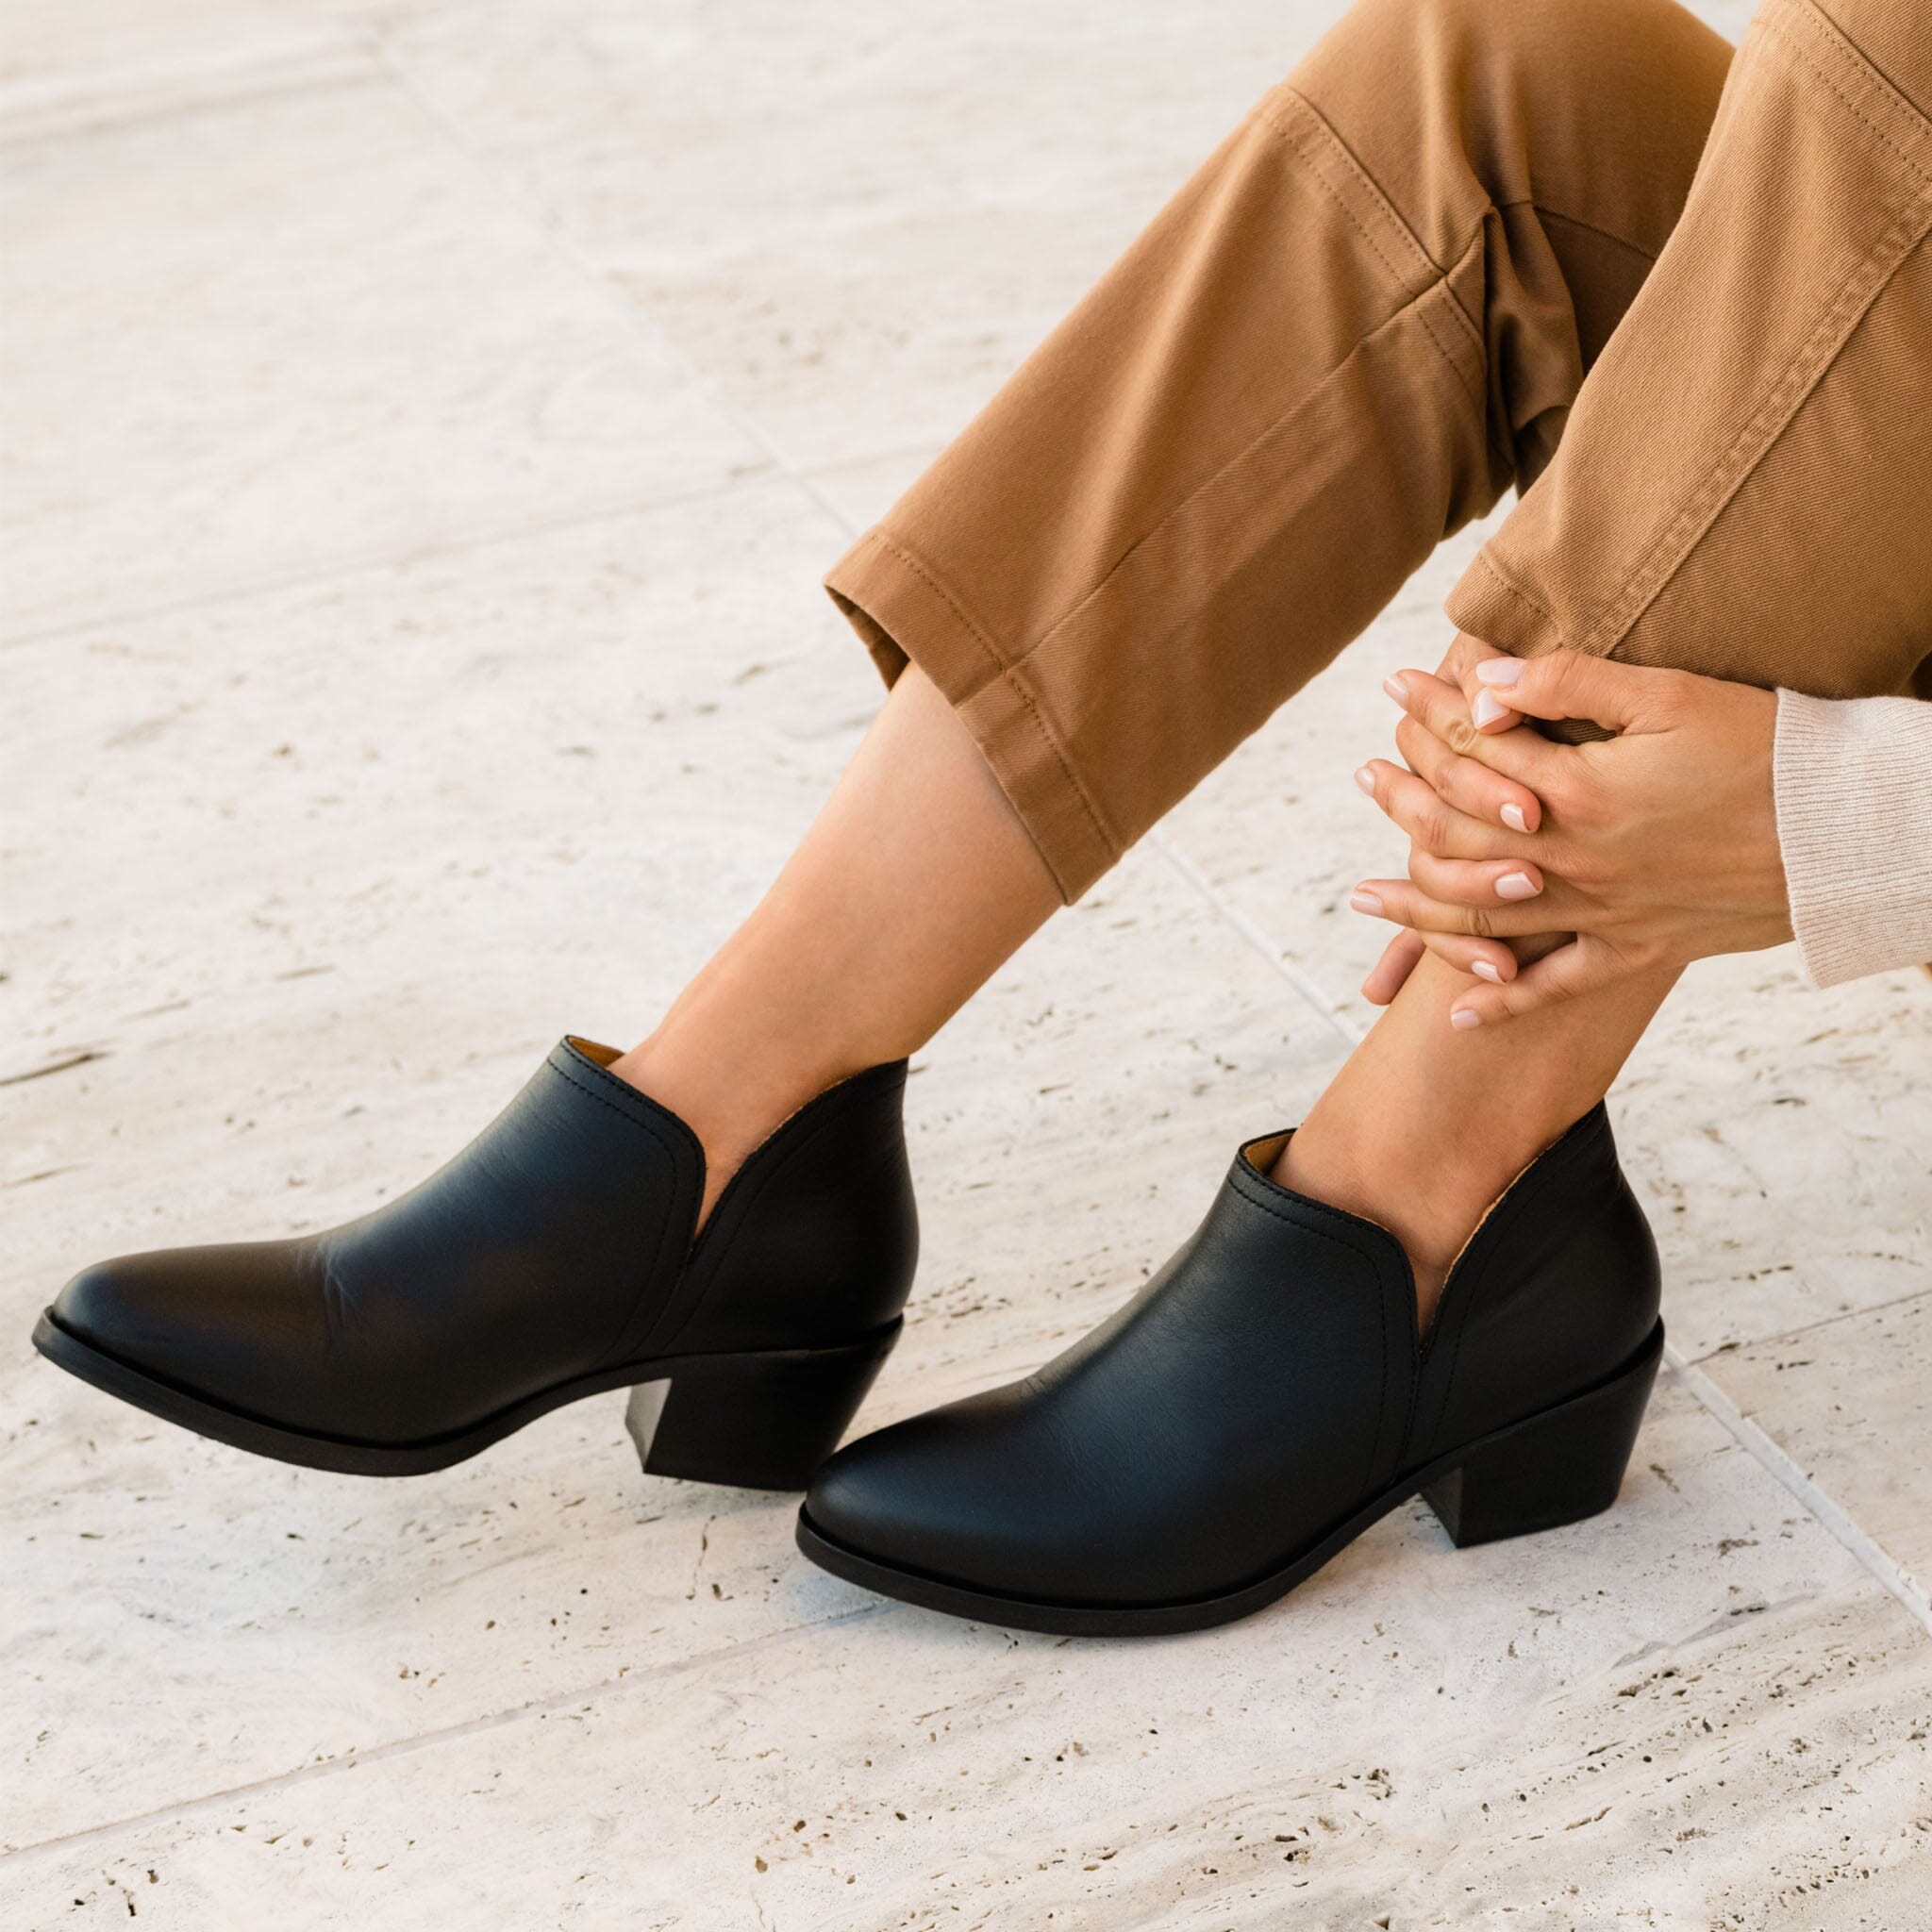 Nisolo Sustainable Women's Mia Everyday Ankle Bootie Black/Black, Size 9